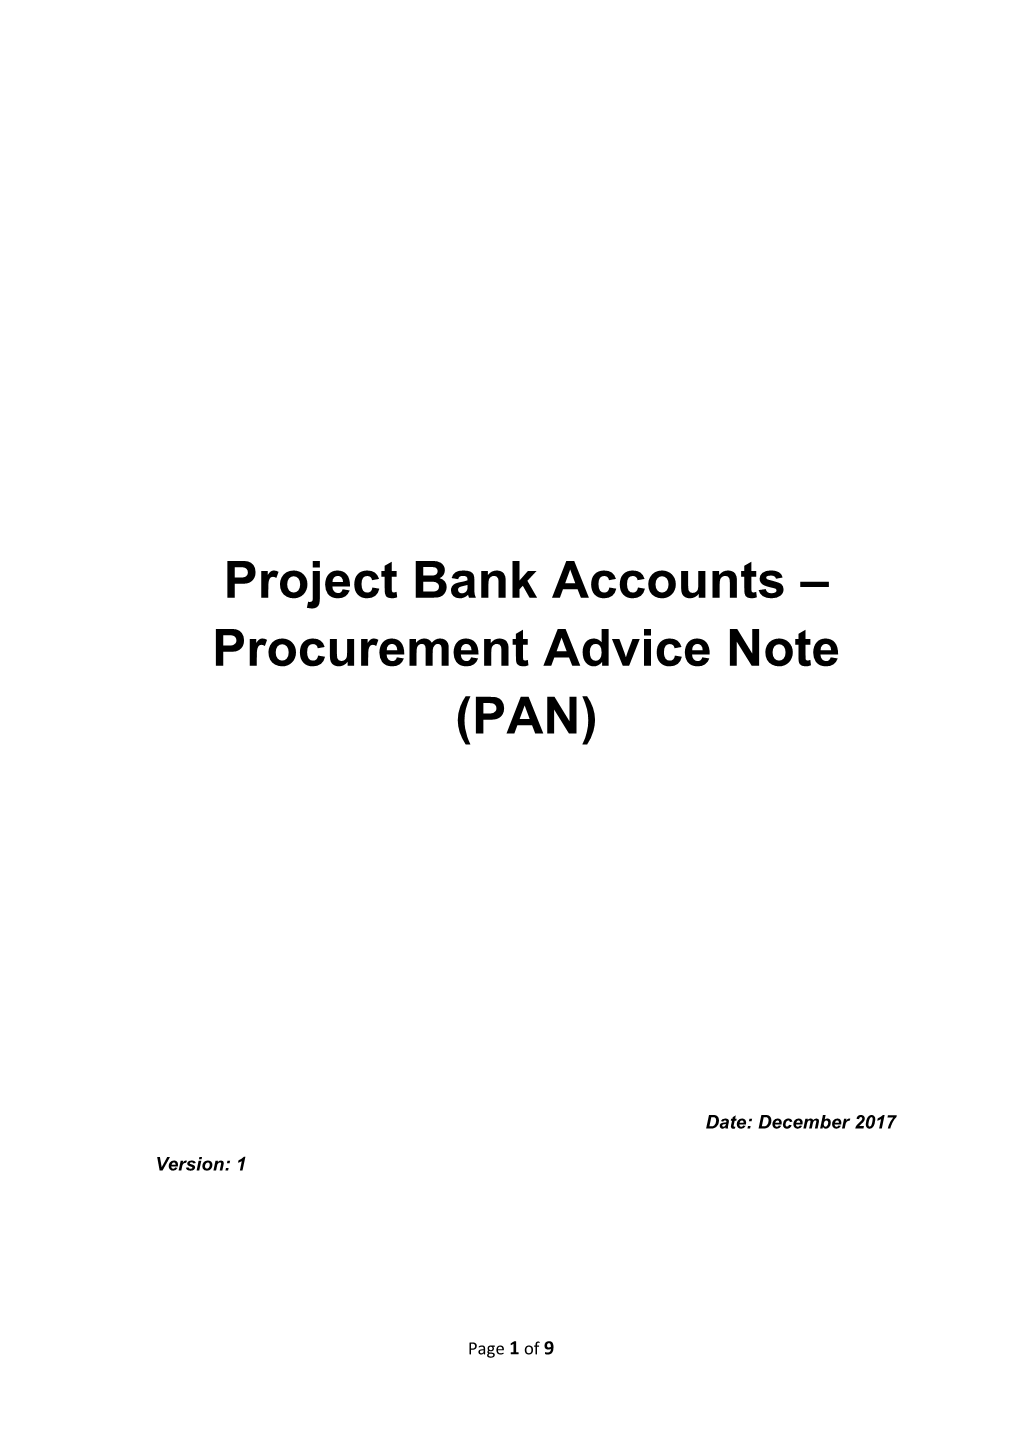 Project Bank Accounts Procurement Advice Note (PAN)